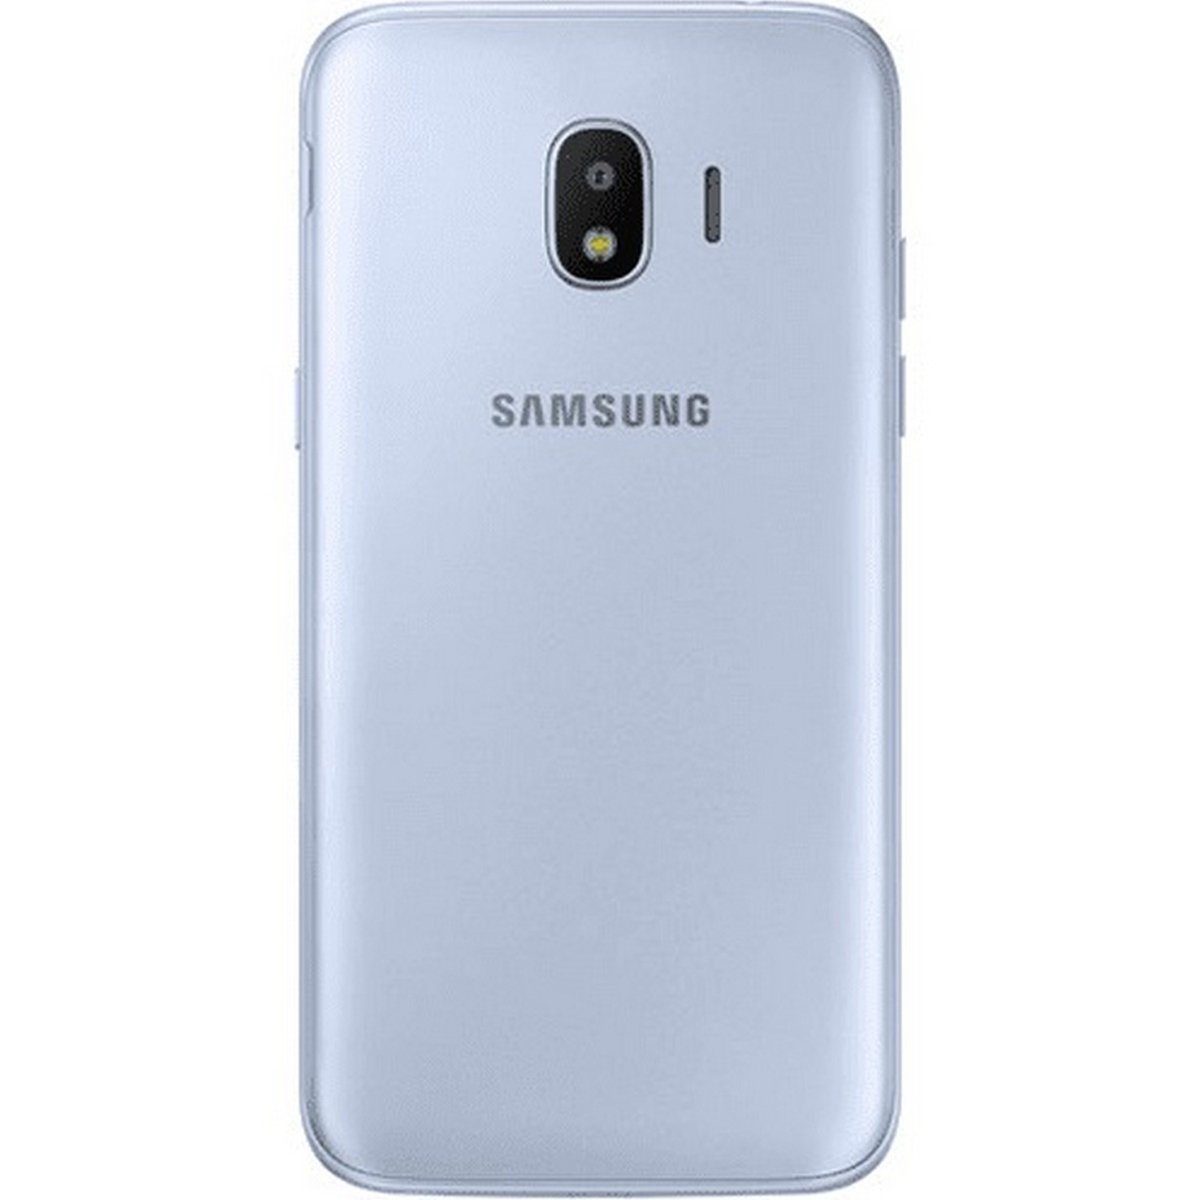 Samsung Galaxy J2(J250)Grand Prime Pro 2018 16GB 4G Silver Blue